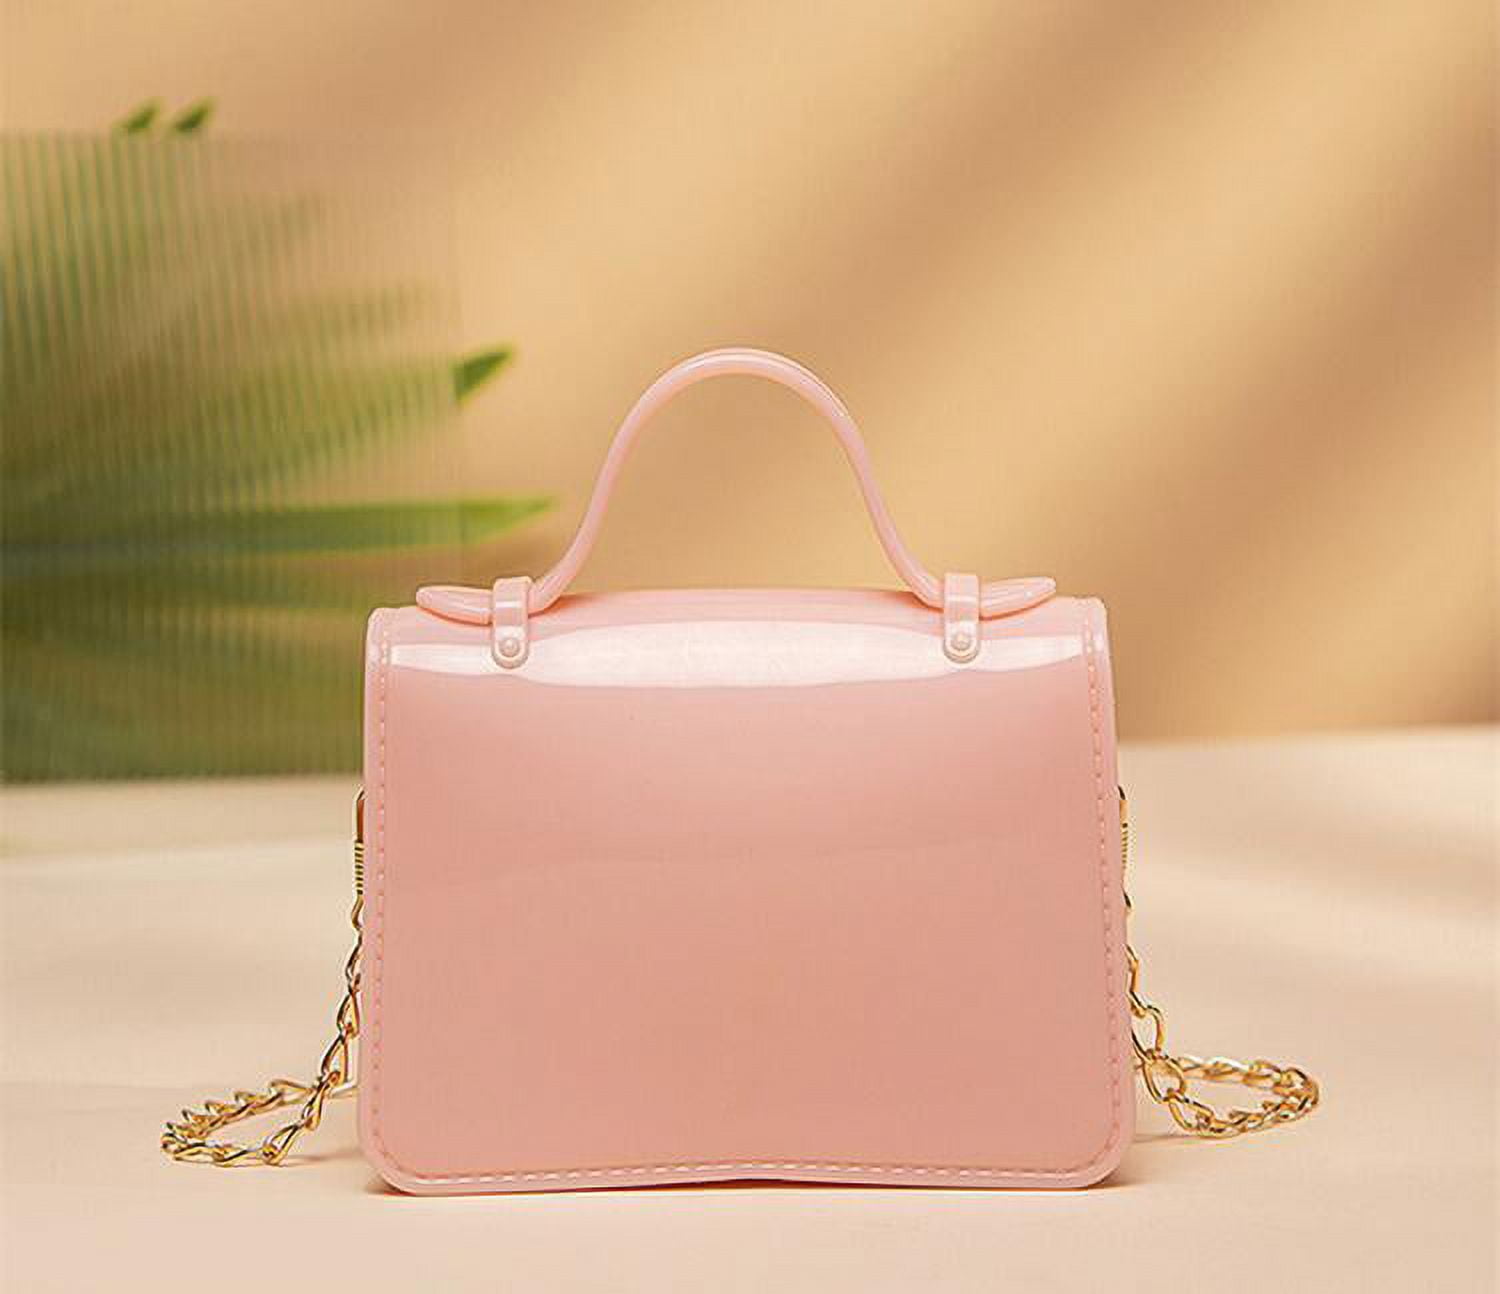 OFUNIO Mini Purse sling bag for Girls Kids Jelly Purse Clutch Crossbody  Shoulder Bag Trending Fashion (